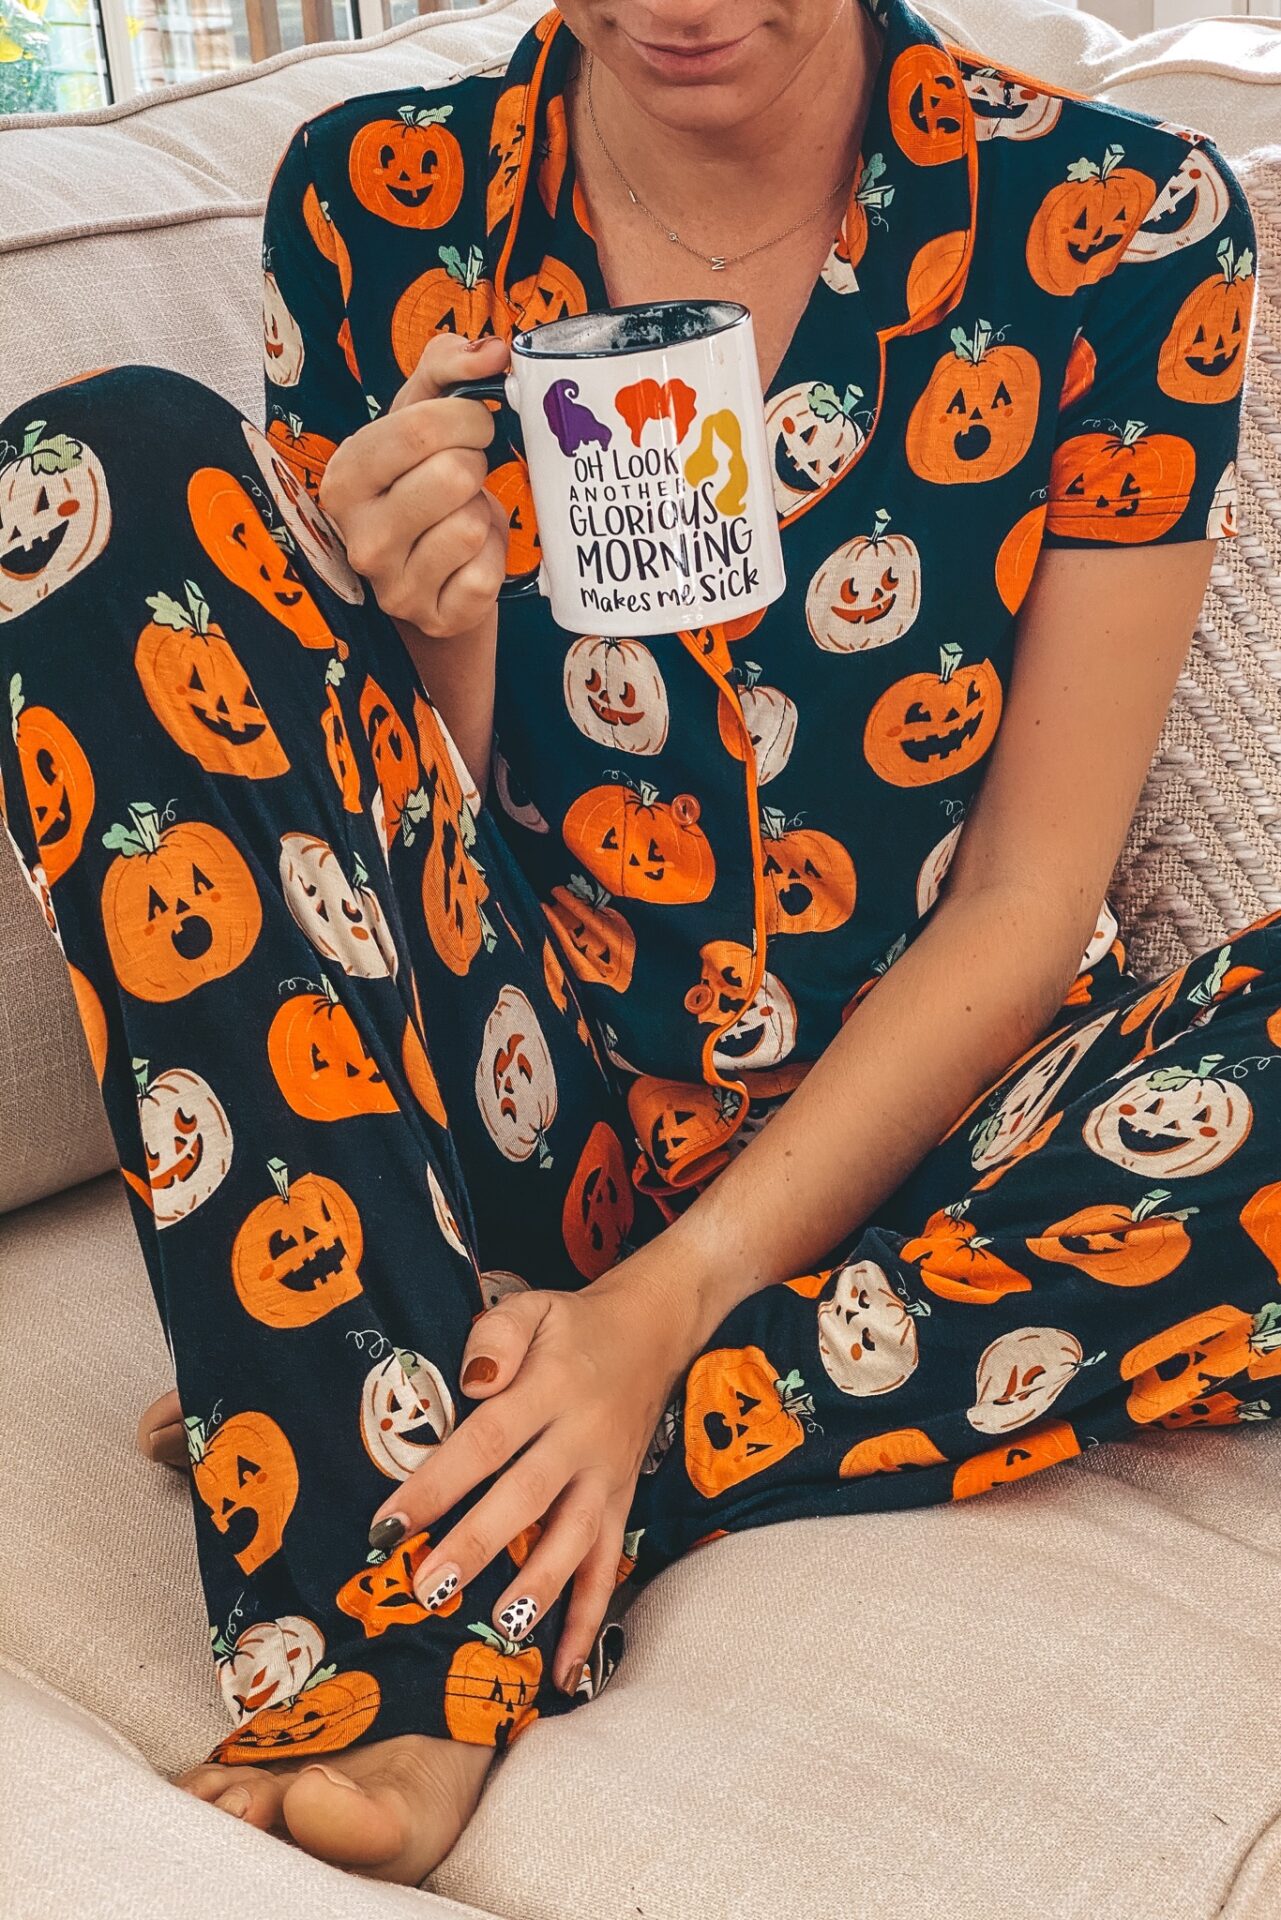 Target Halloween pjs by lifestyle blogger Angela Lanter